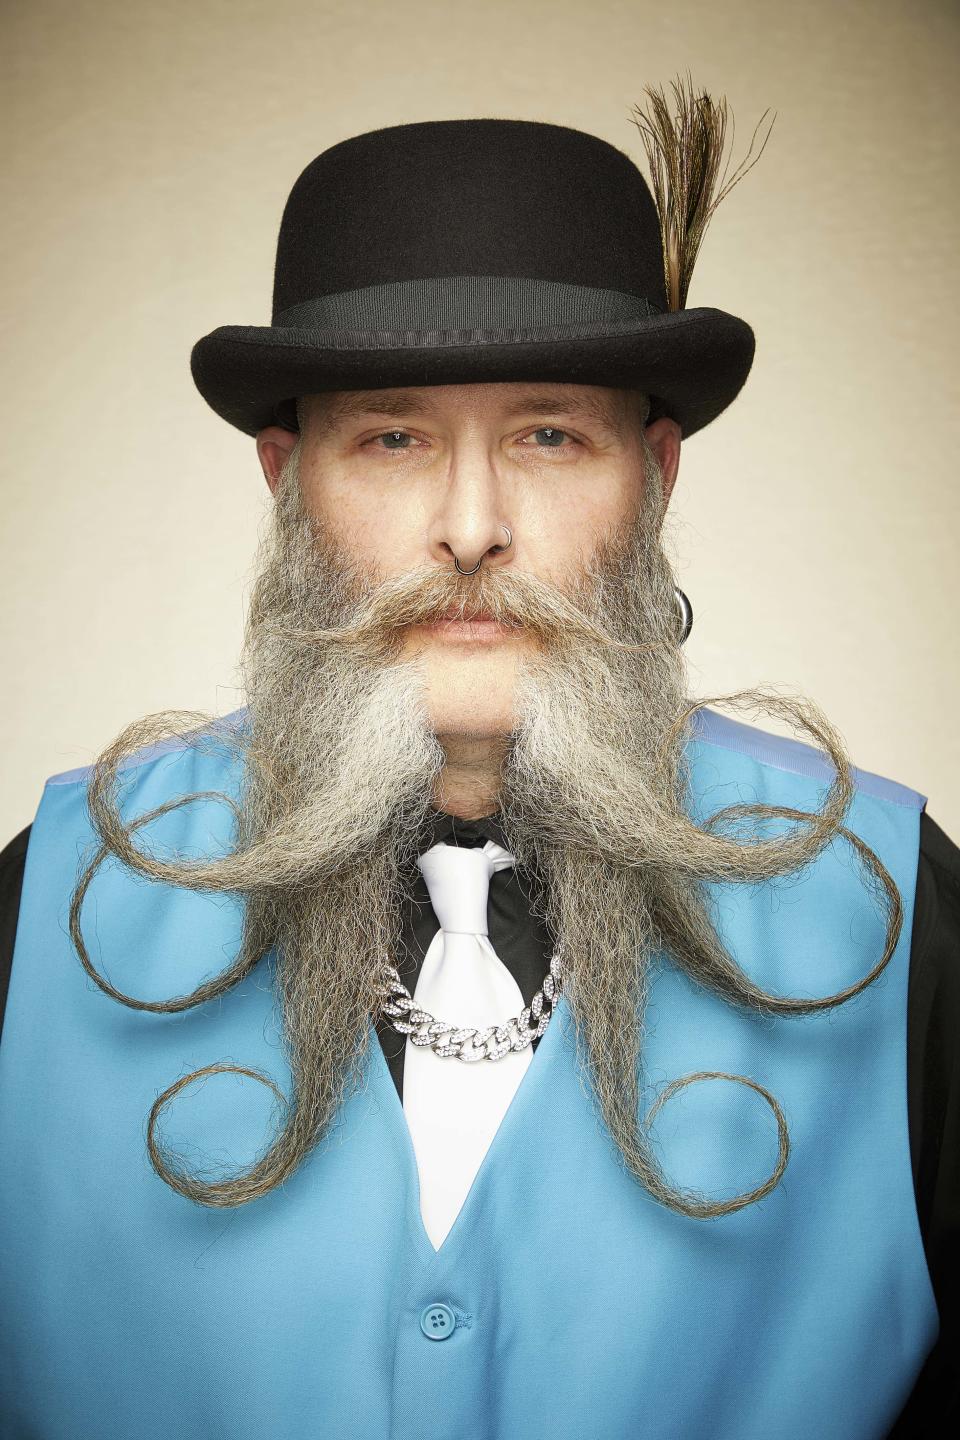 Against the gentleman's blue waistcoat, this facial hair resembles a squid. 